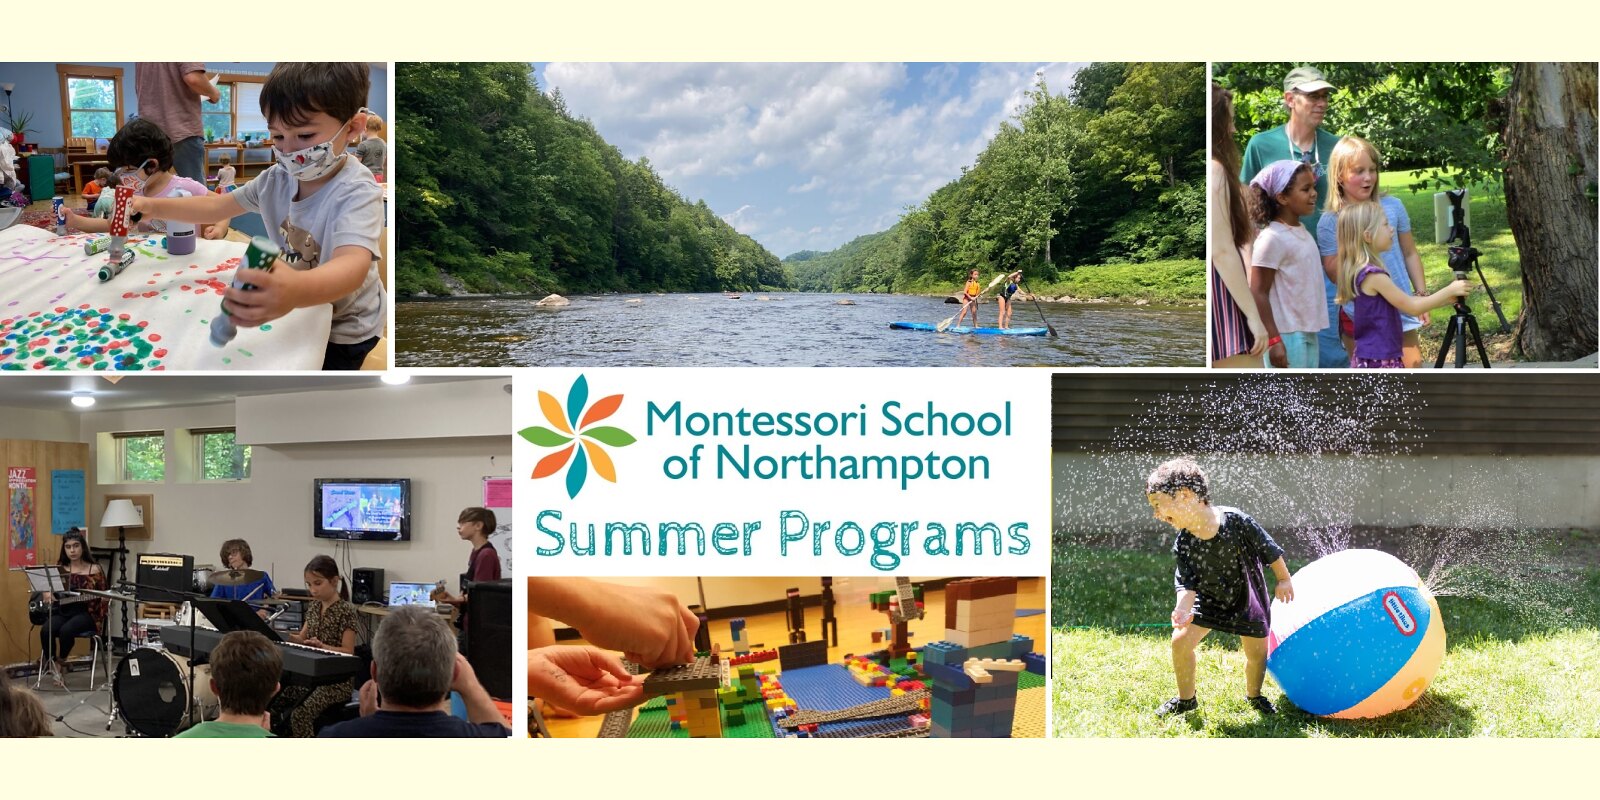 Montessori School of Northampton
Summer Program